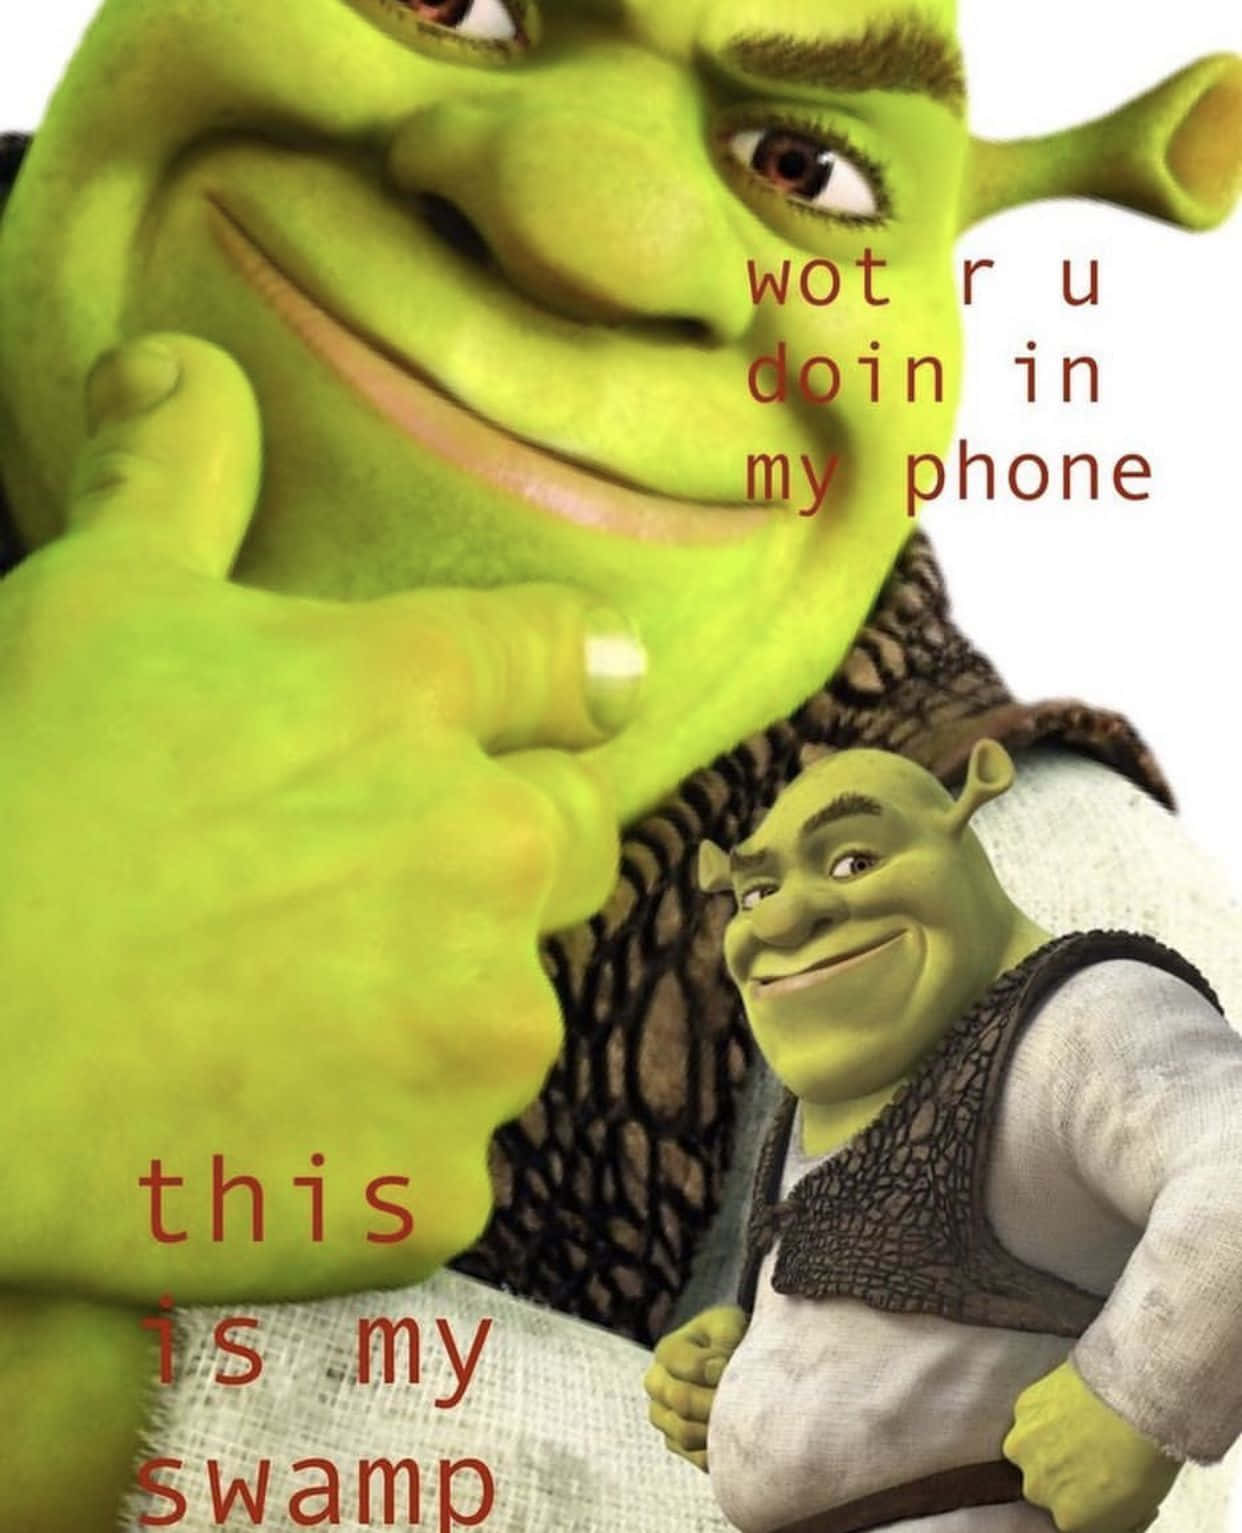 Shrek Pictures